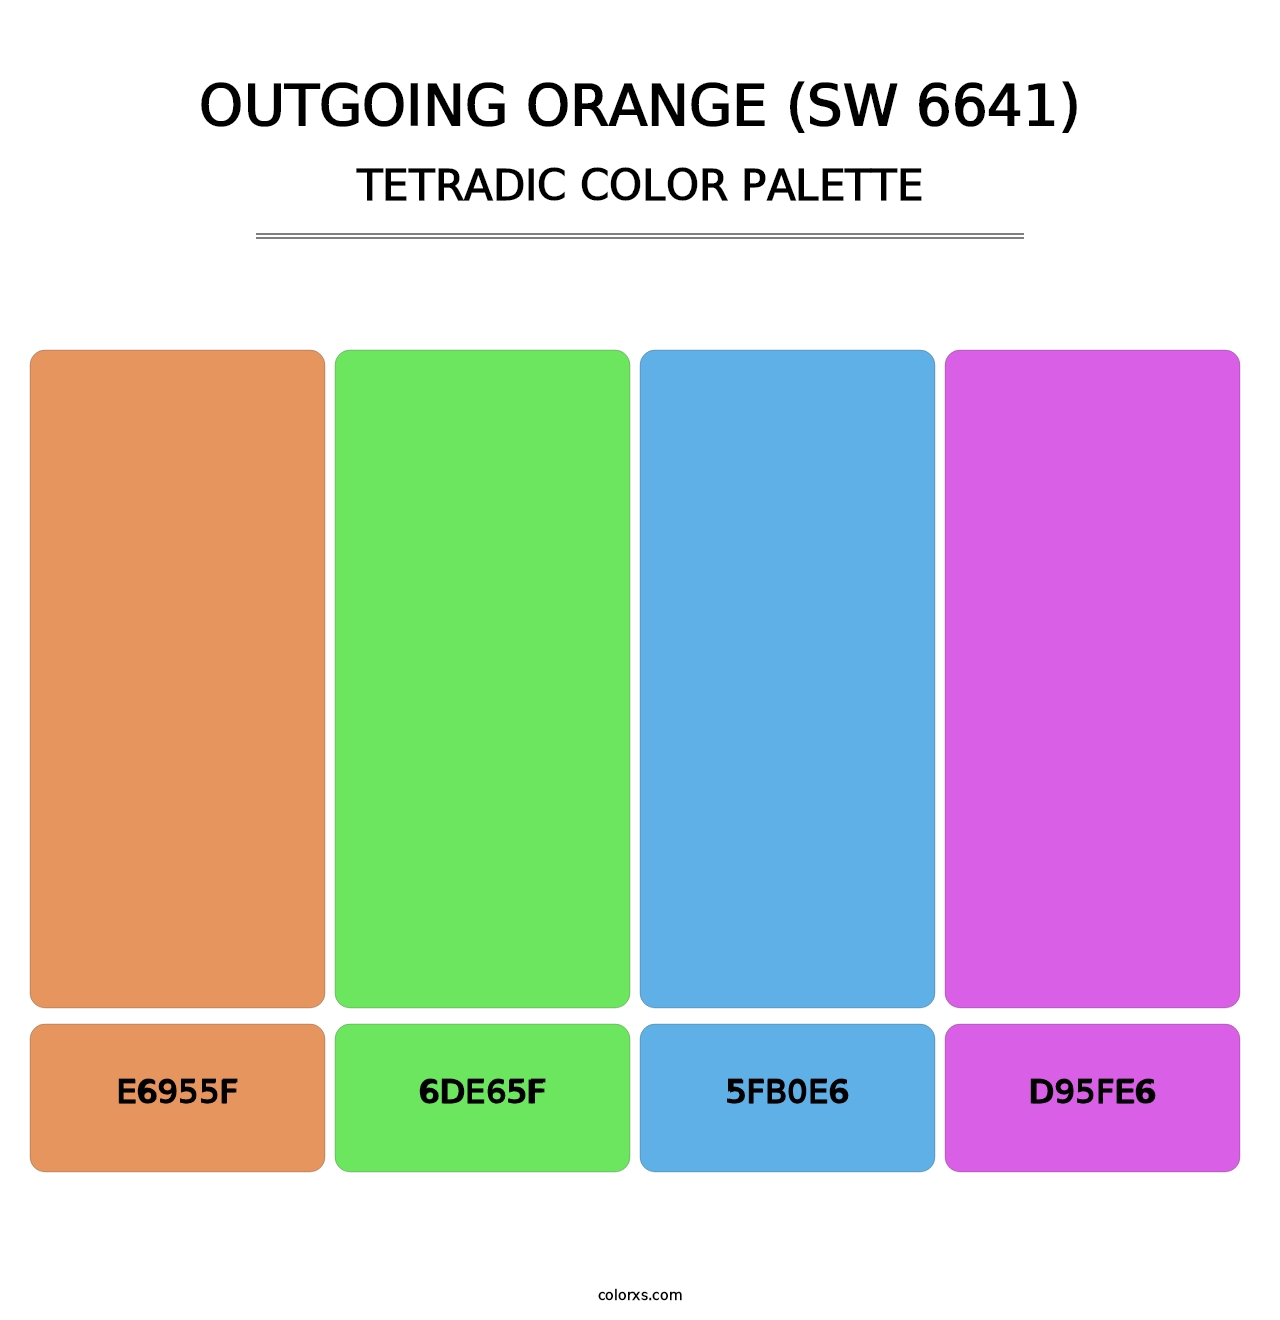 Outgoing Orange (SW 6641) - Tetradic Color Palette